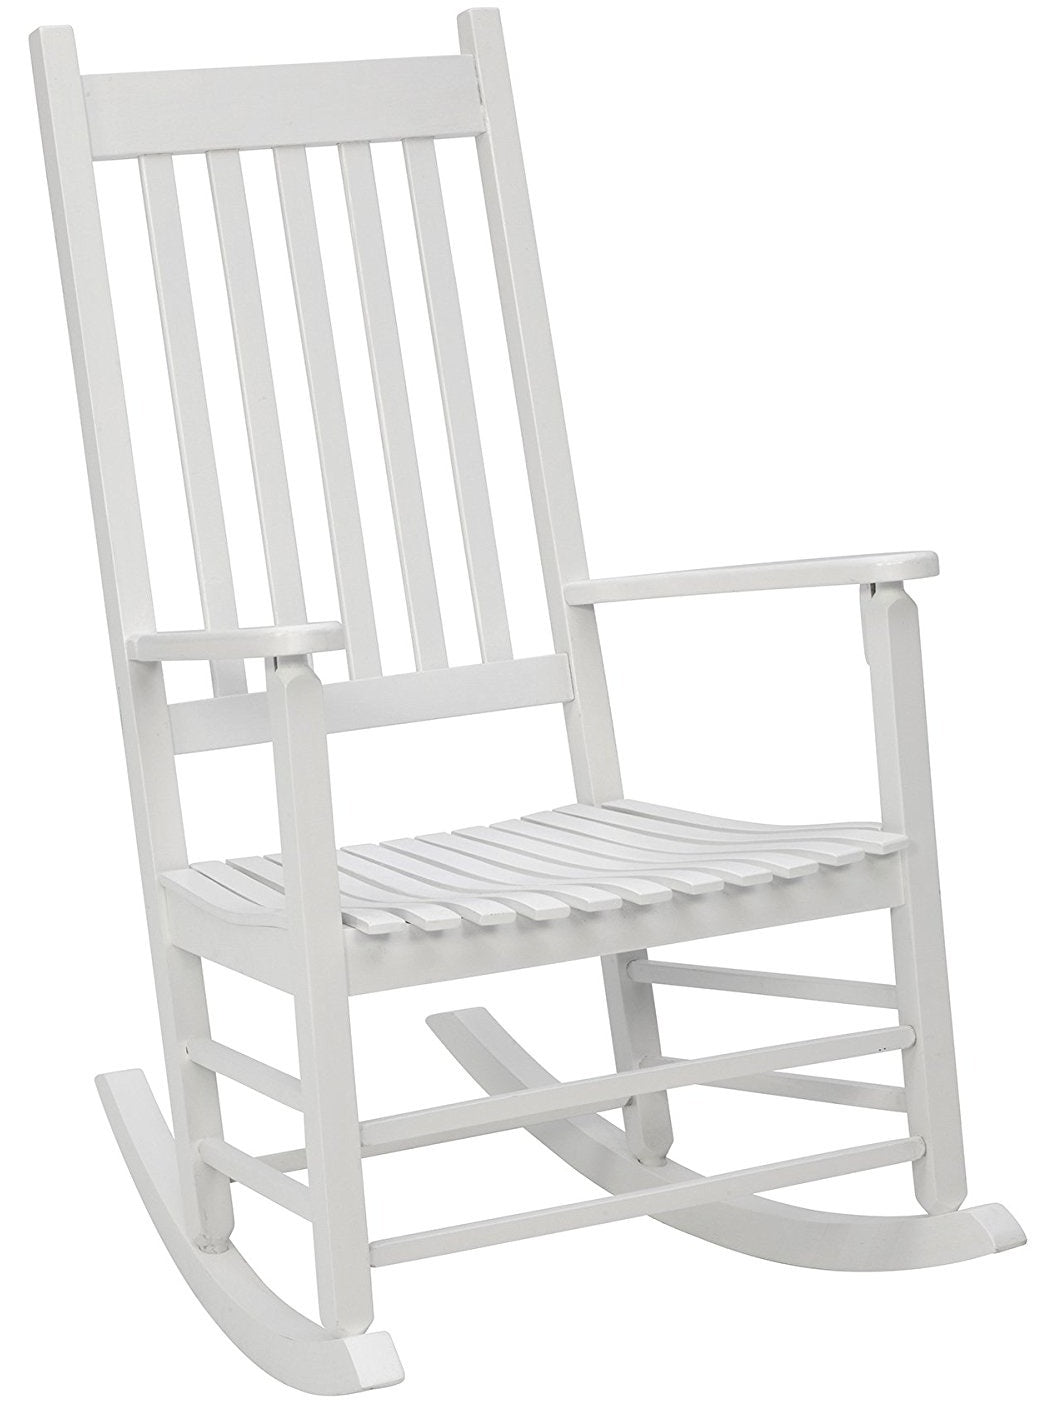 Jack Post JE-128W-JE Mission Knollwood Rocking Chair, Wood, White